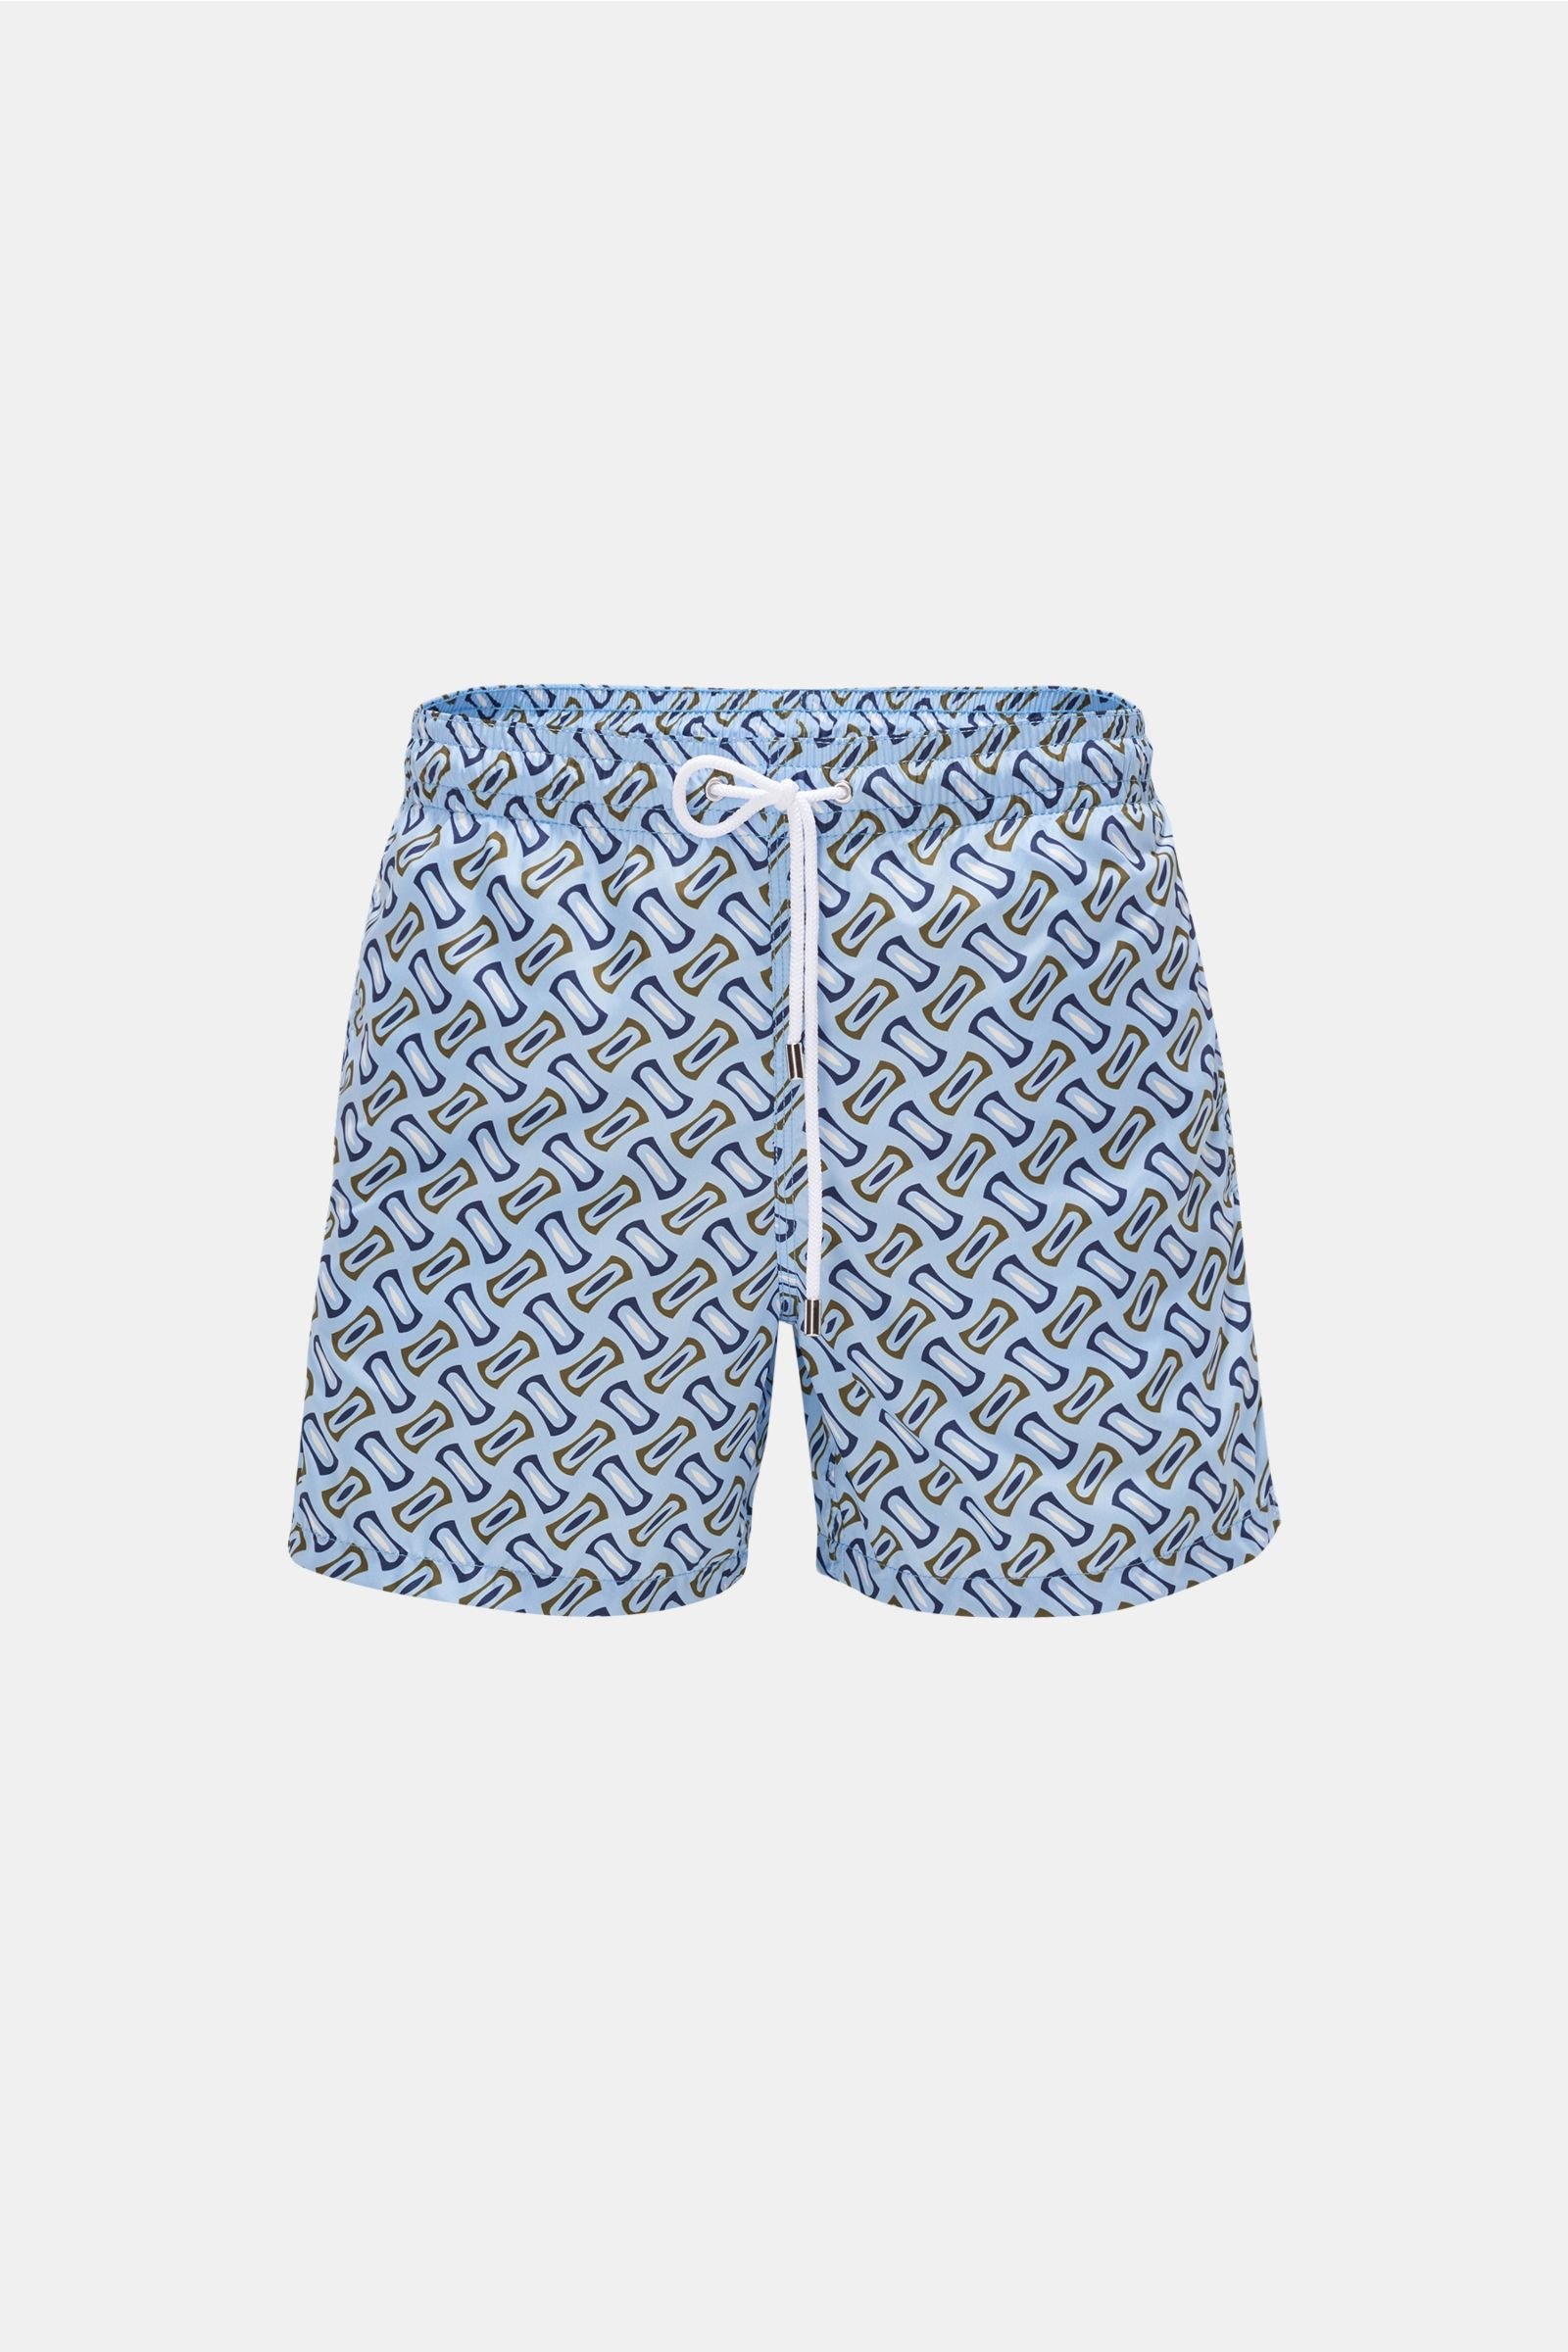 Swim shorts 'Stromboli' light blue/olive patterned